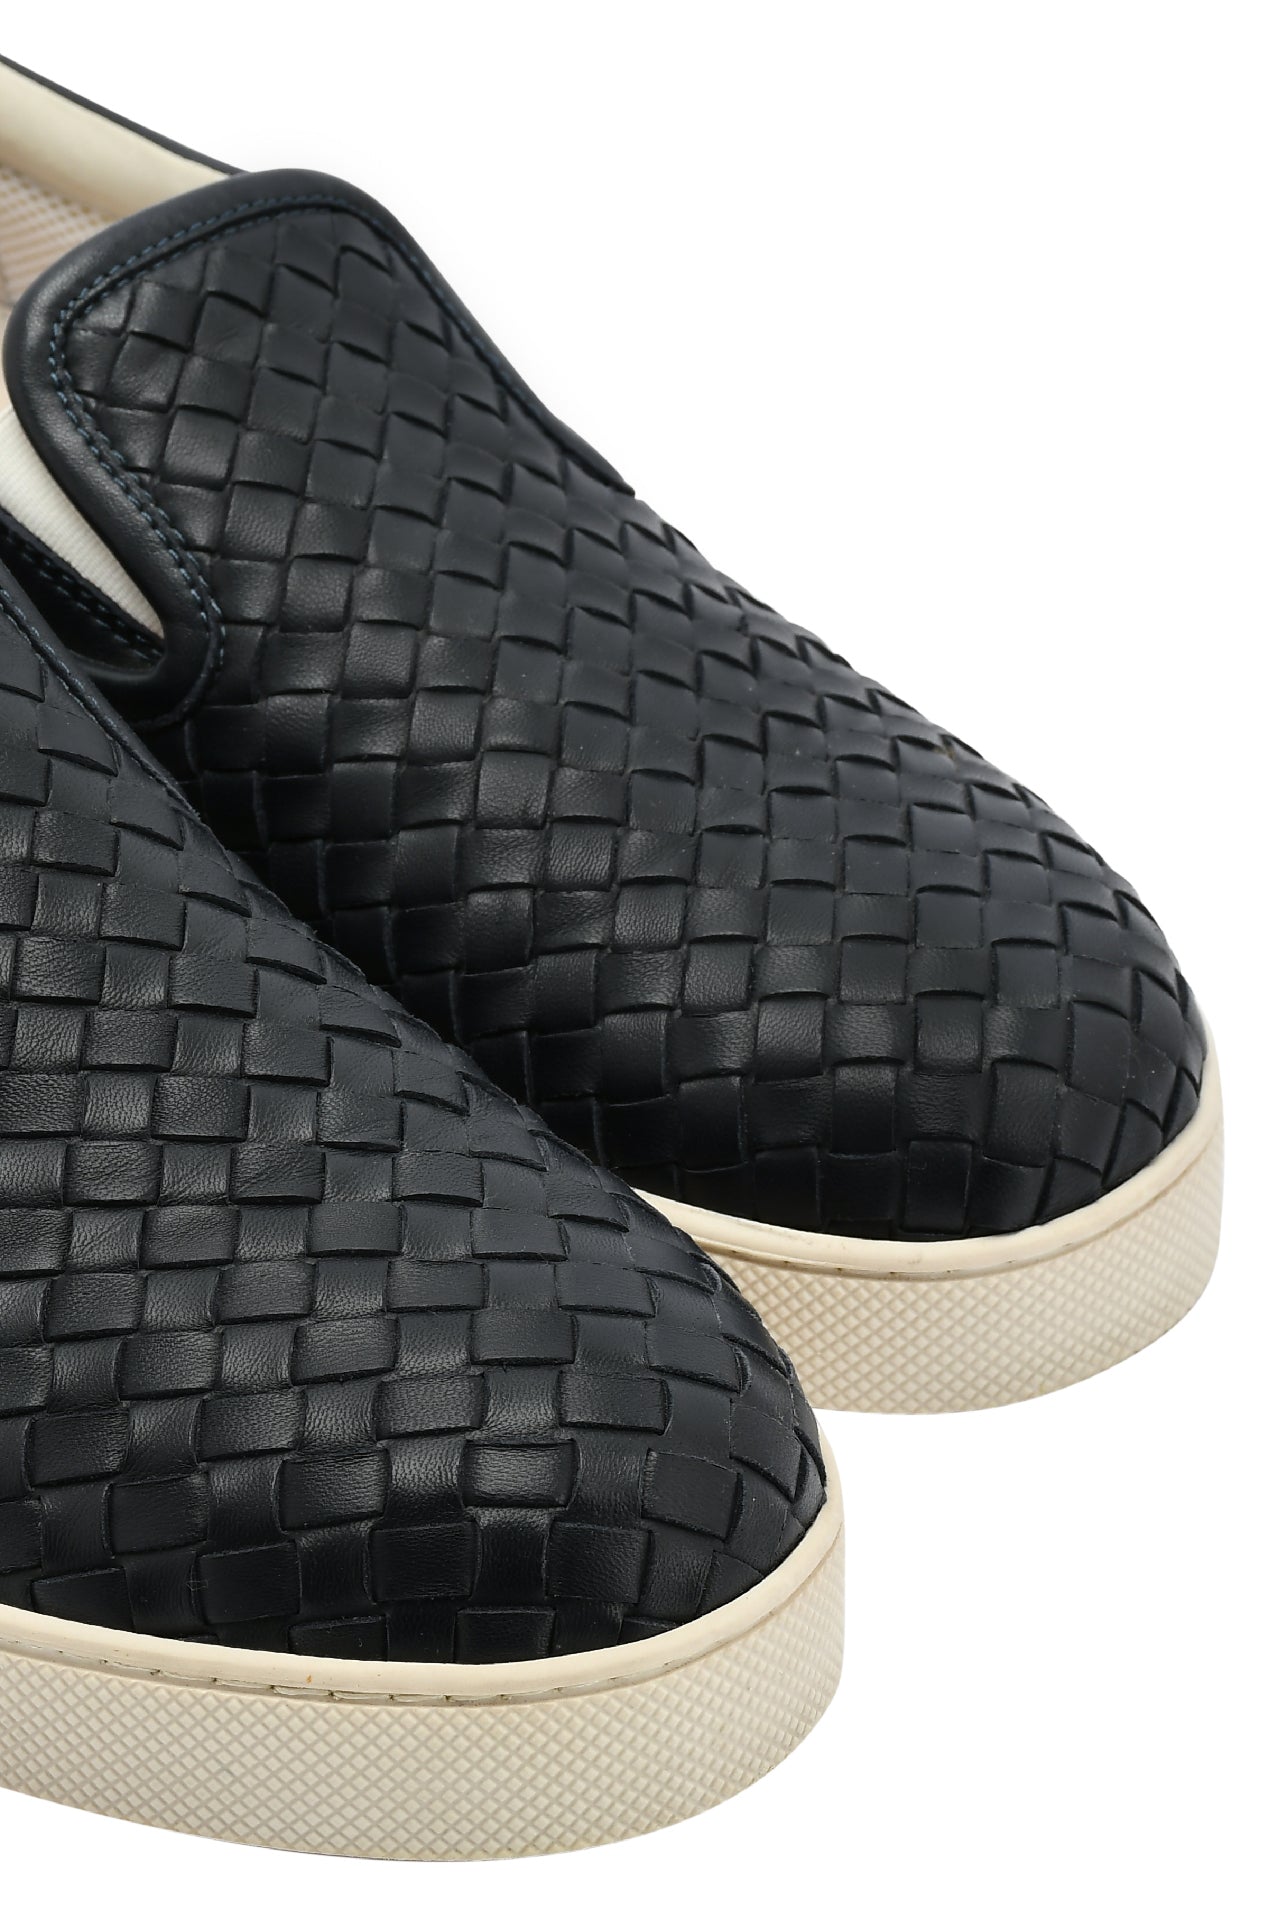 Bottega Veneta Black Intrecciato Leather Slip On Sneakers EU 42